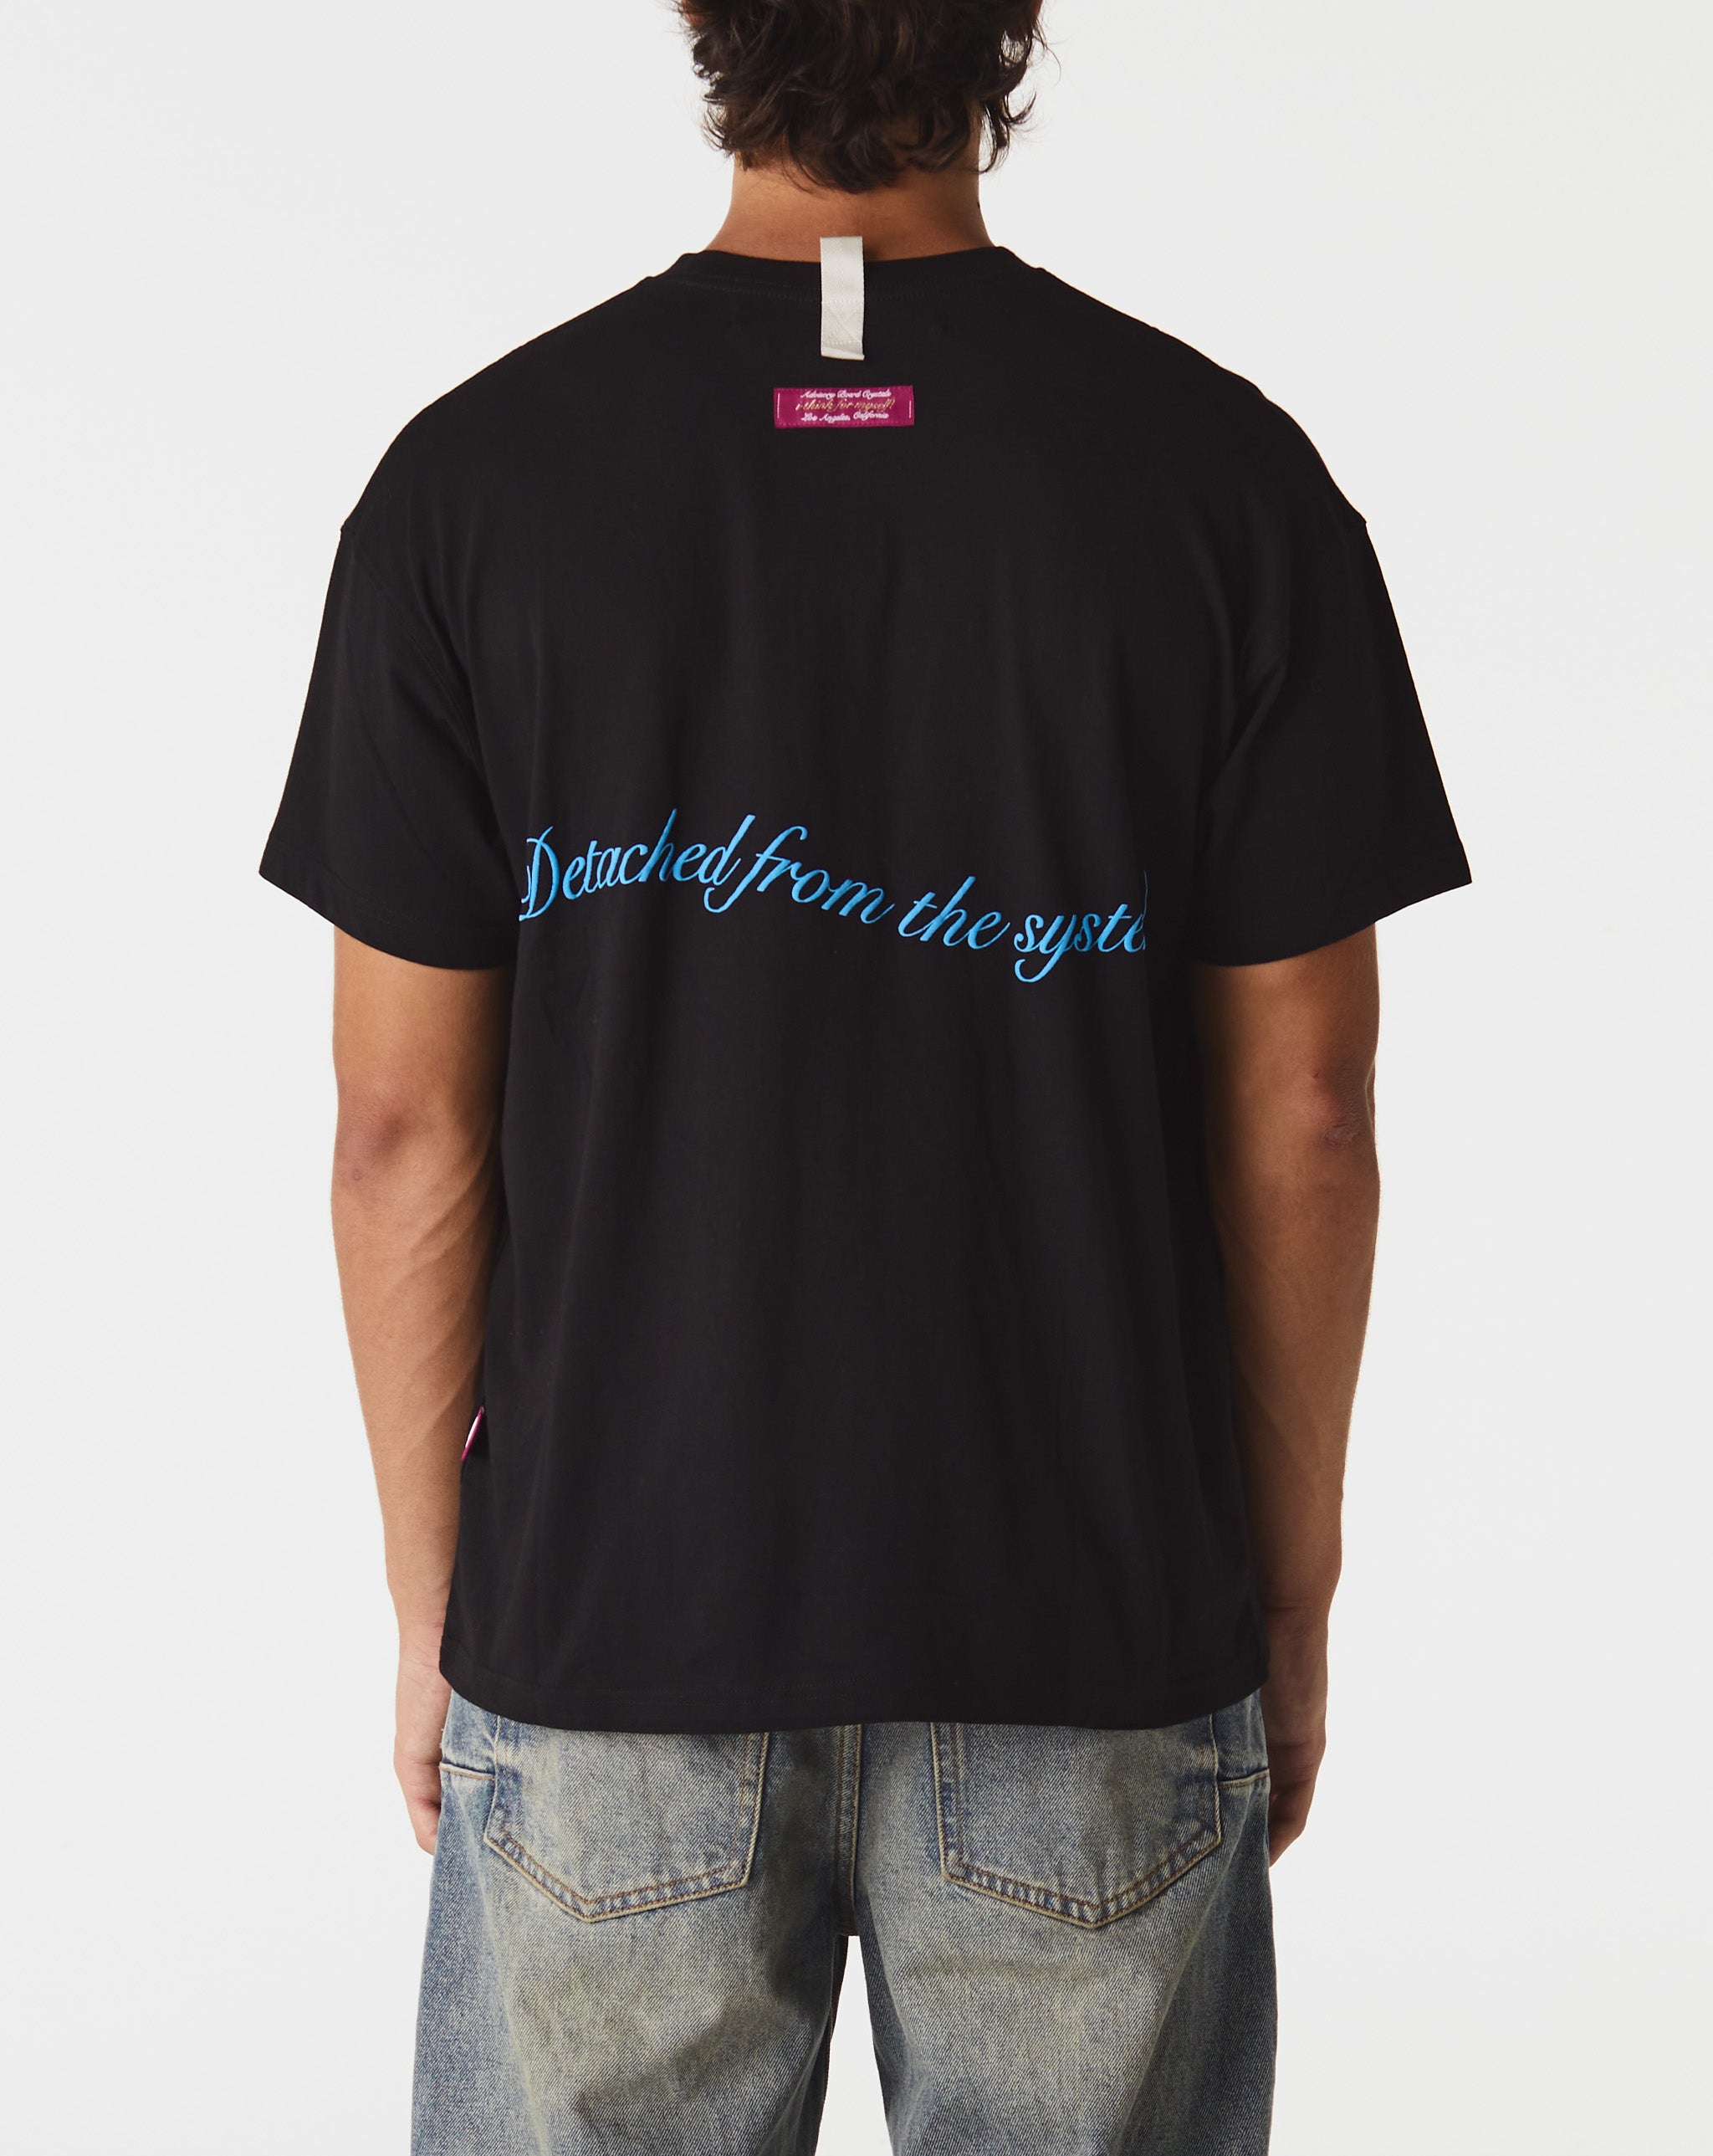 martini gravity t shirt OBEMN Herd Mentaltity T-Shirt  - Cheap Cerbe Jordan outlet